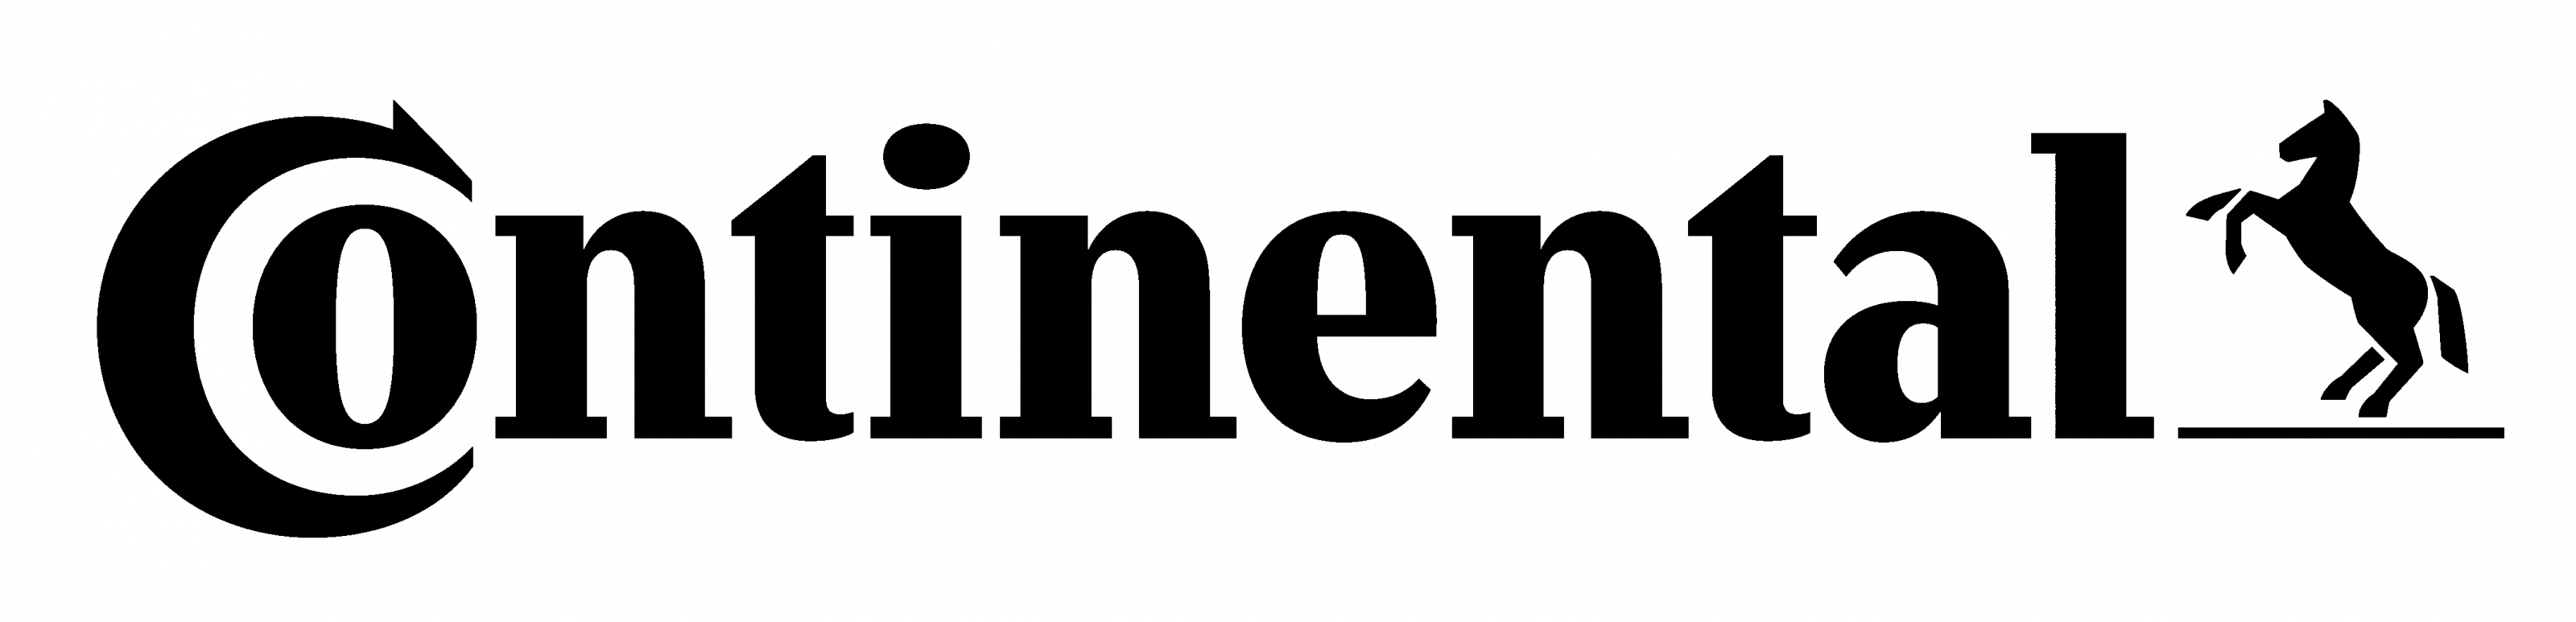 Производитель CONTINENTAL логотип